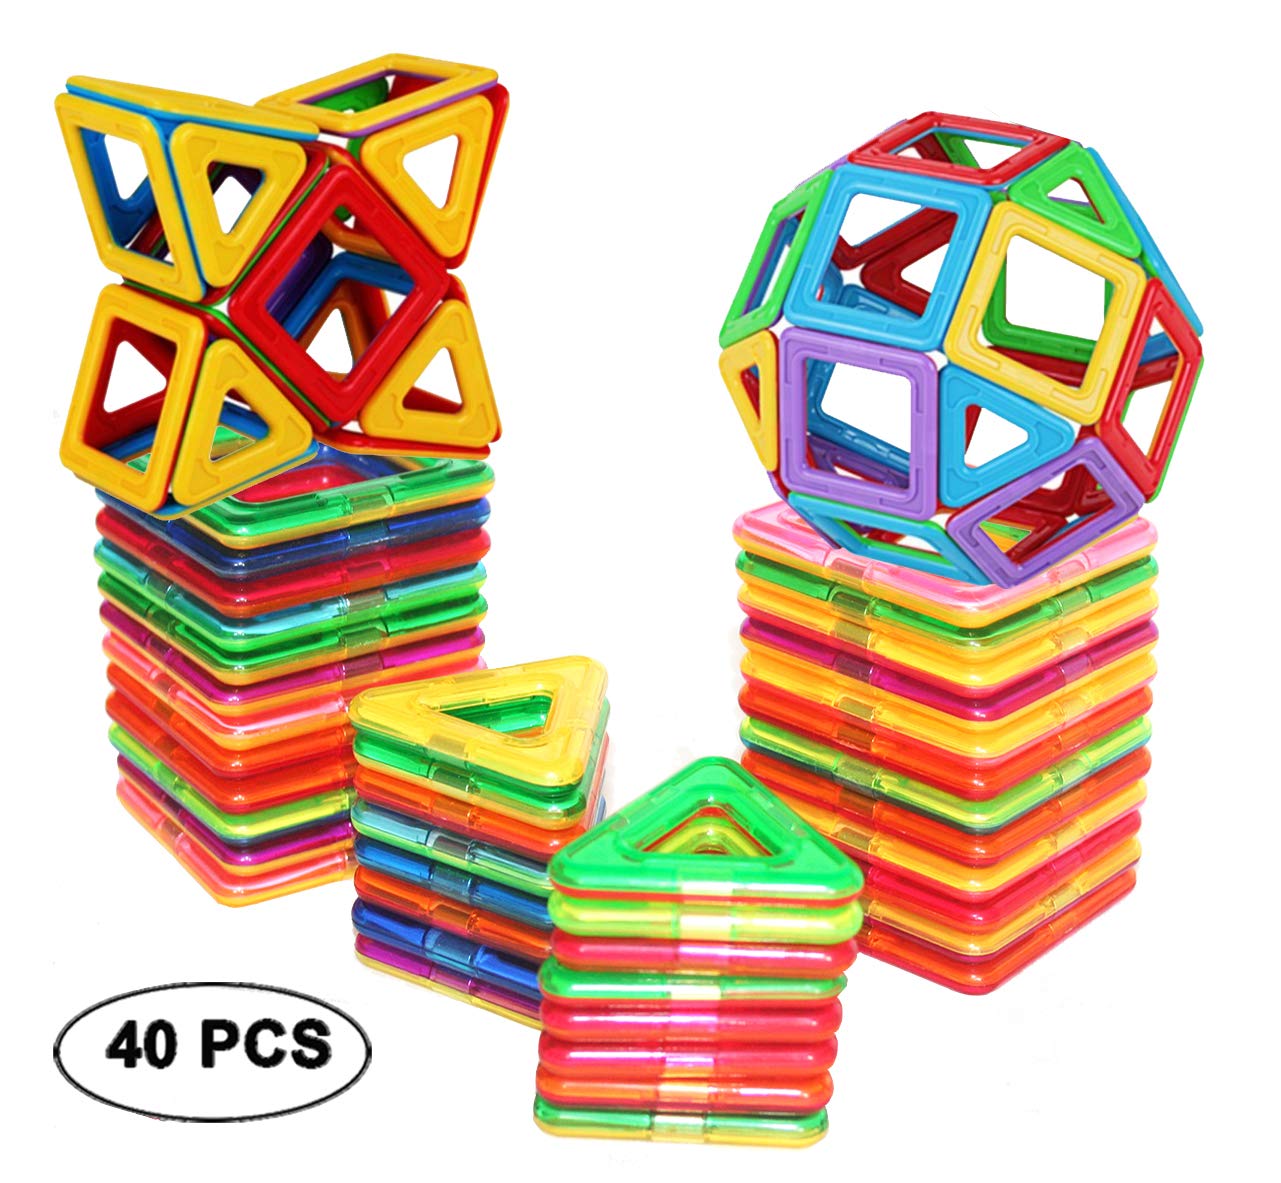 DreambuilderToy Magnetic Tiles Building Blocks Toys